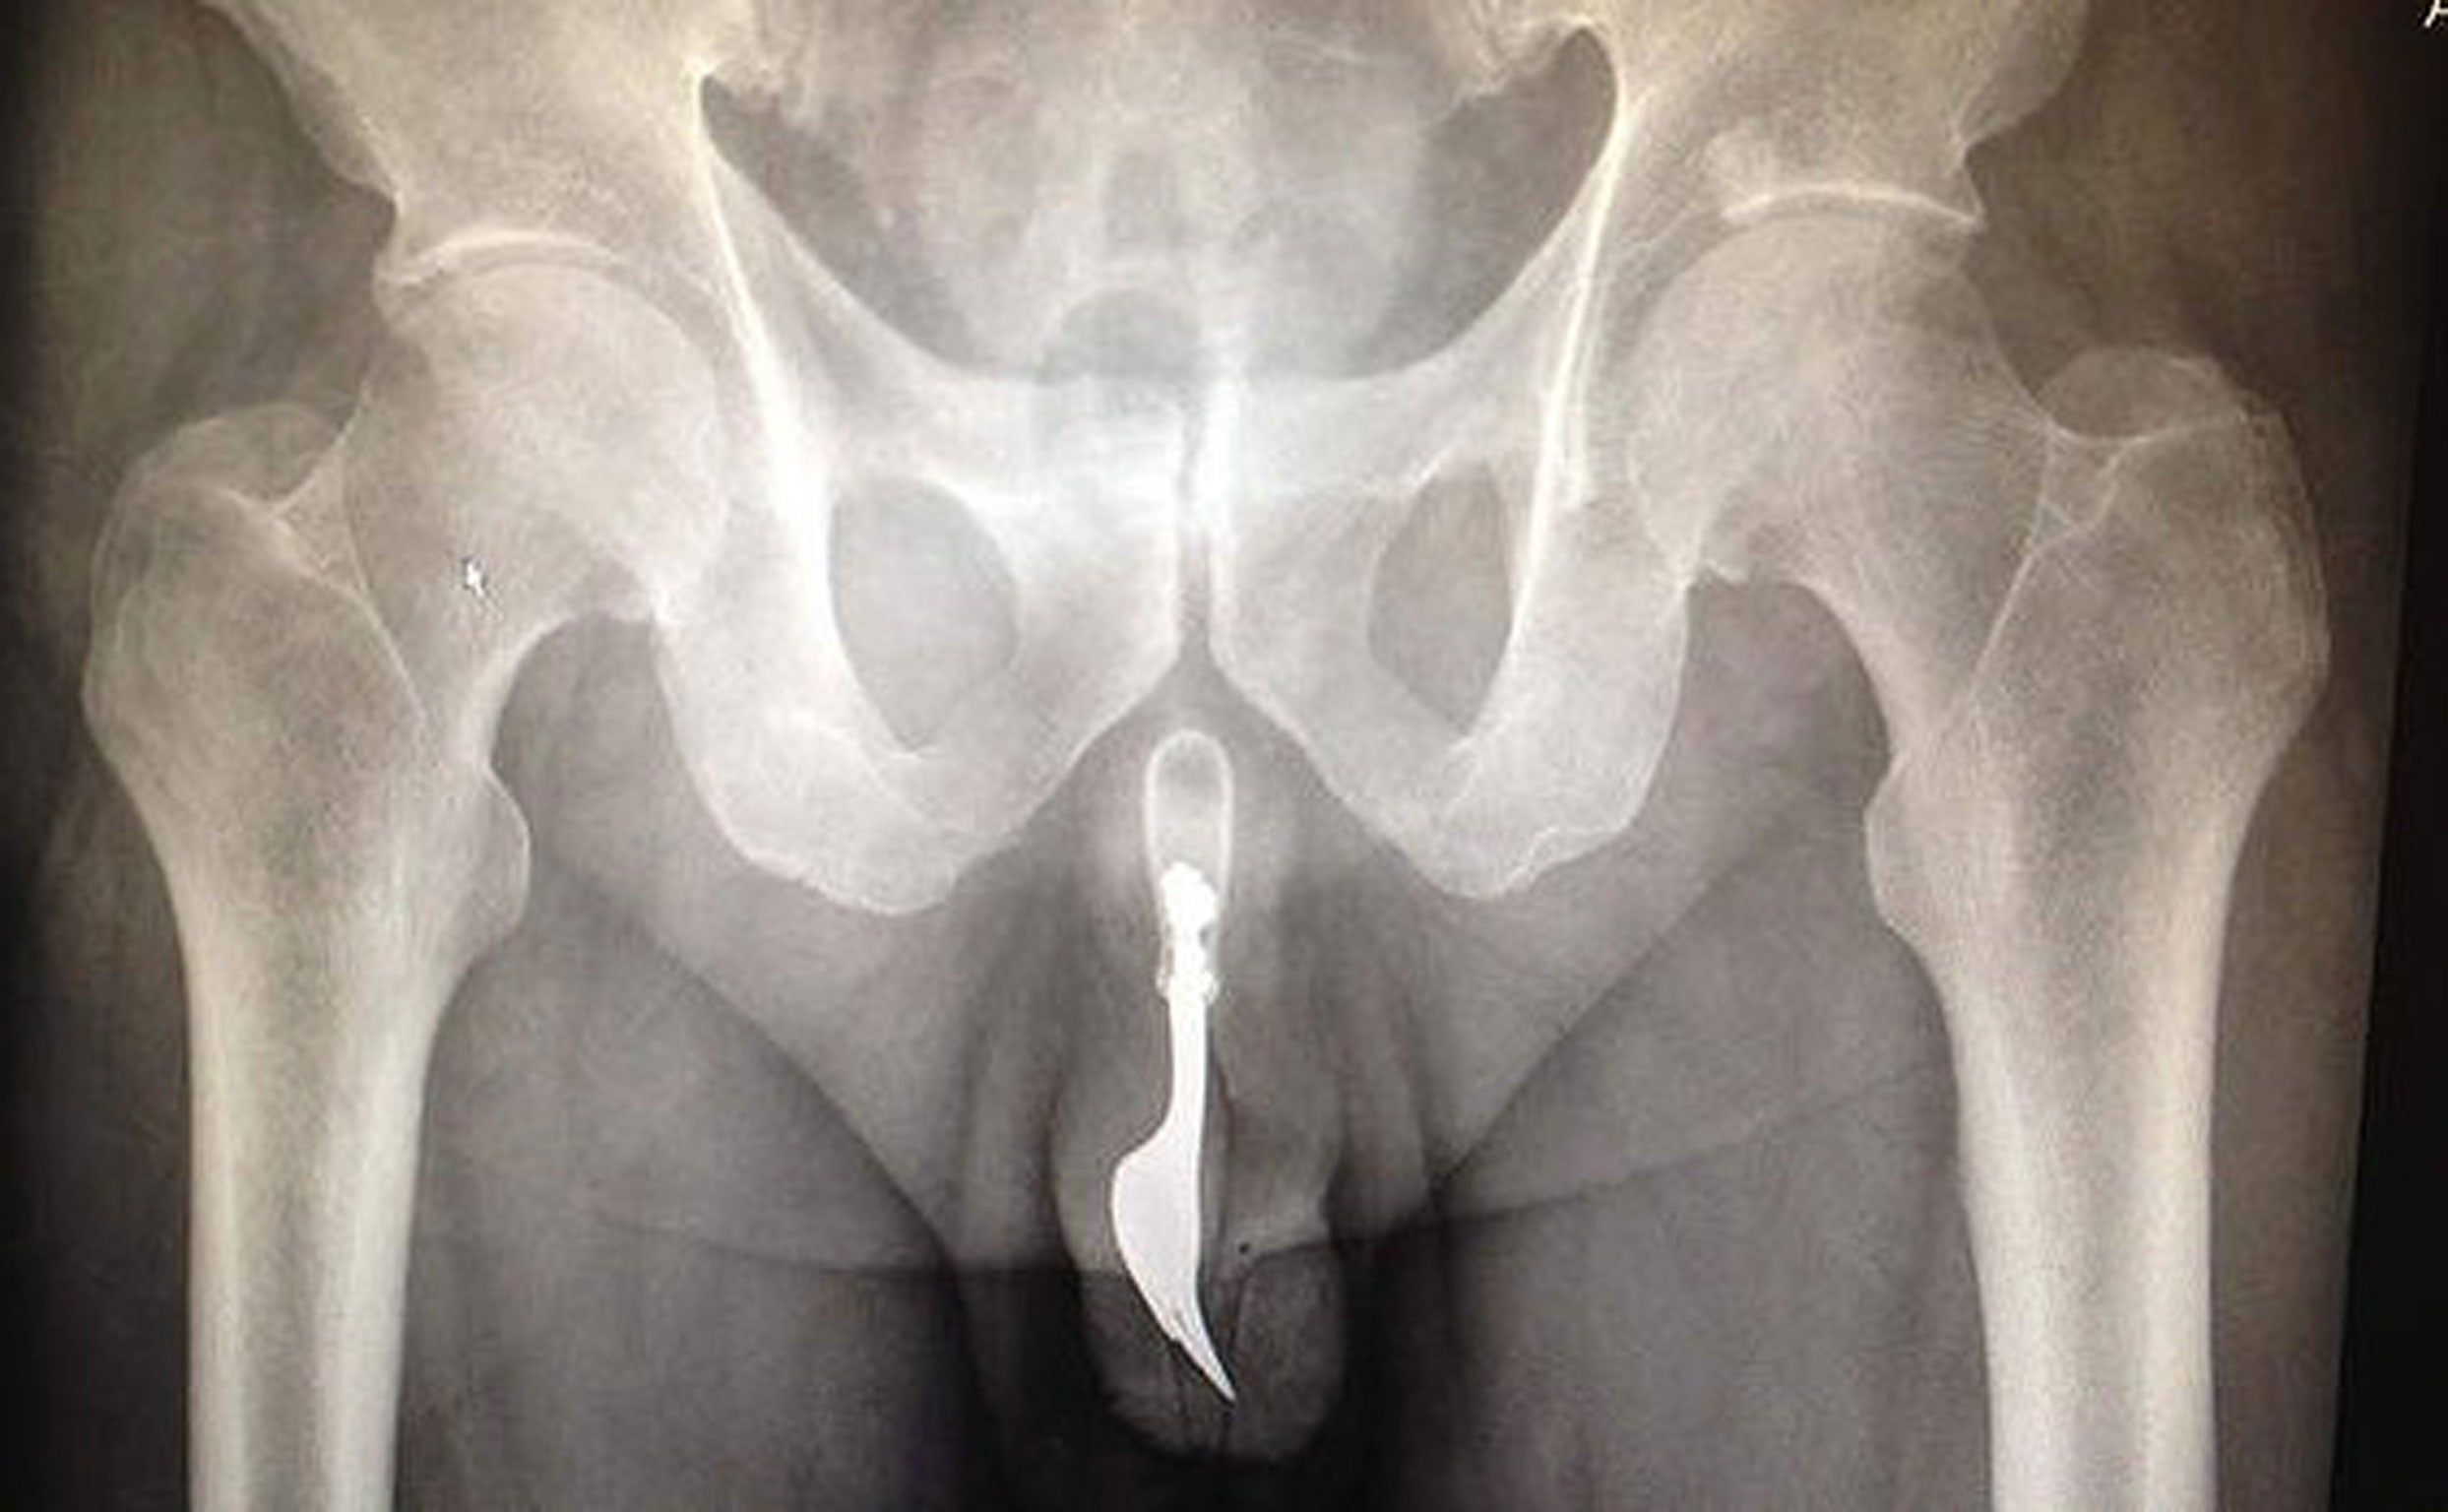 Giant penis urethras